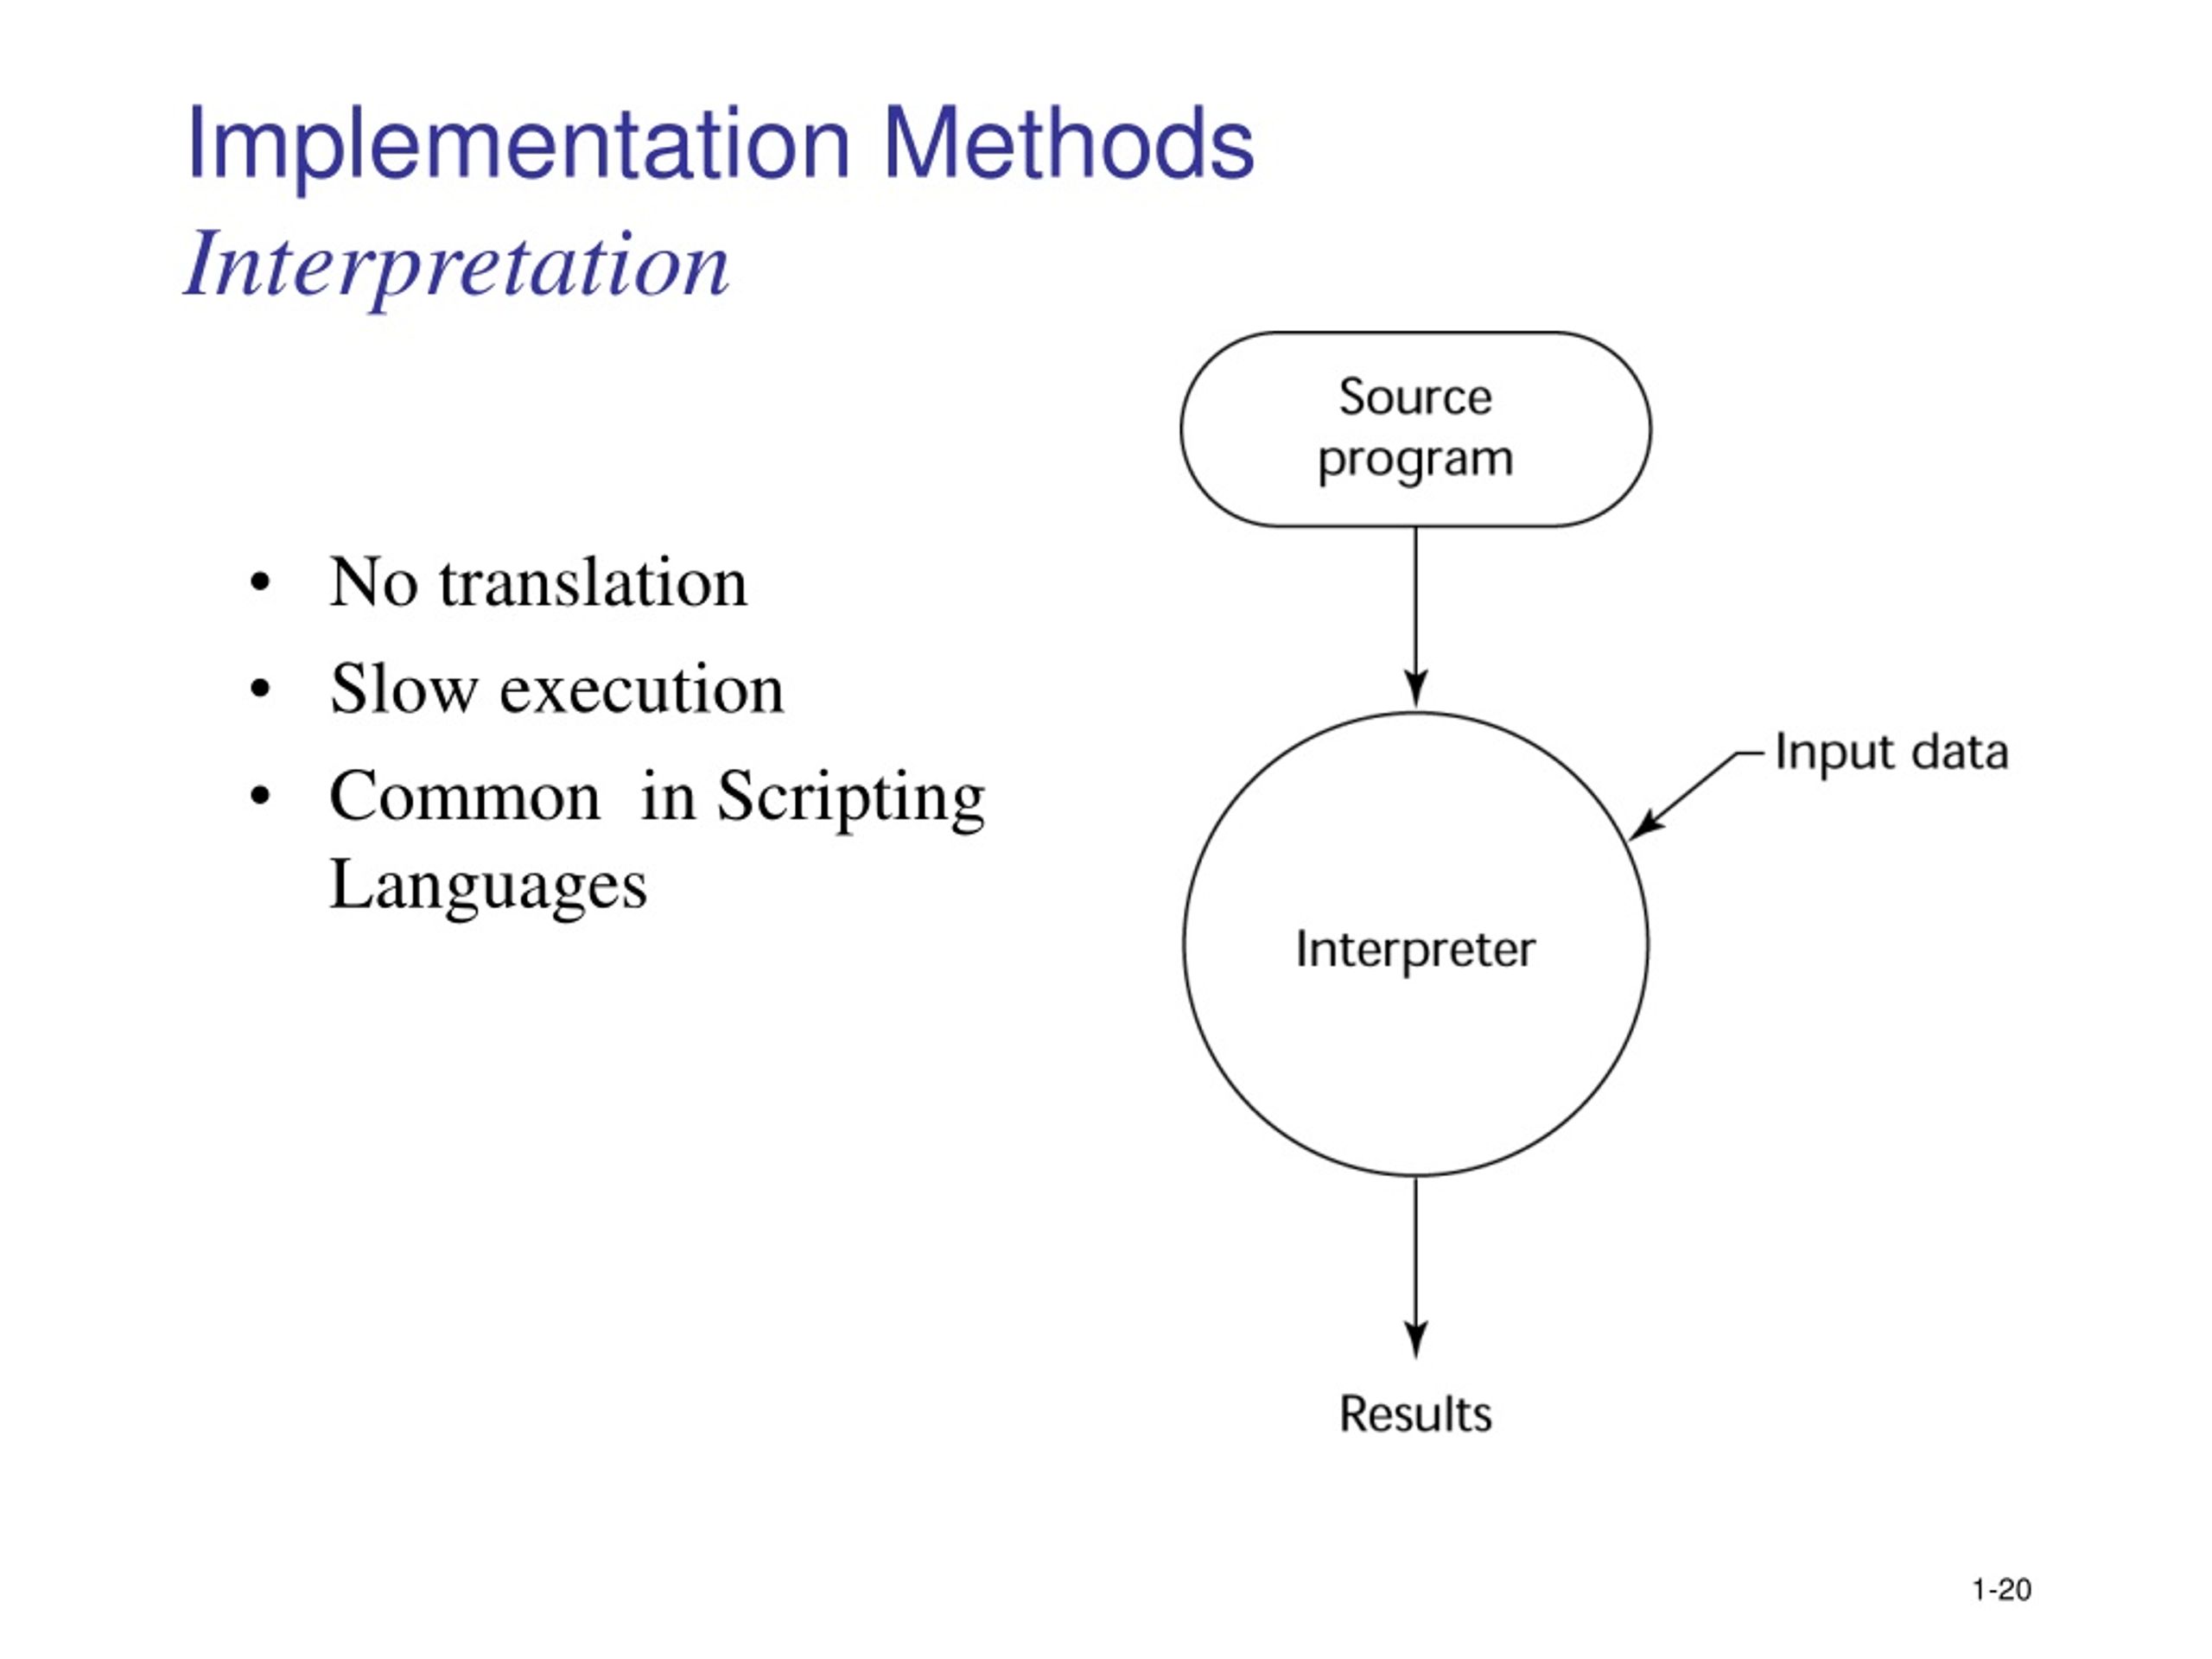 Implementation methods. Interpretation method. Скриптинг схема. Implementation перевод. "Structure and interpretation of Computer programs" автора Харольда.